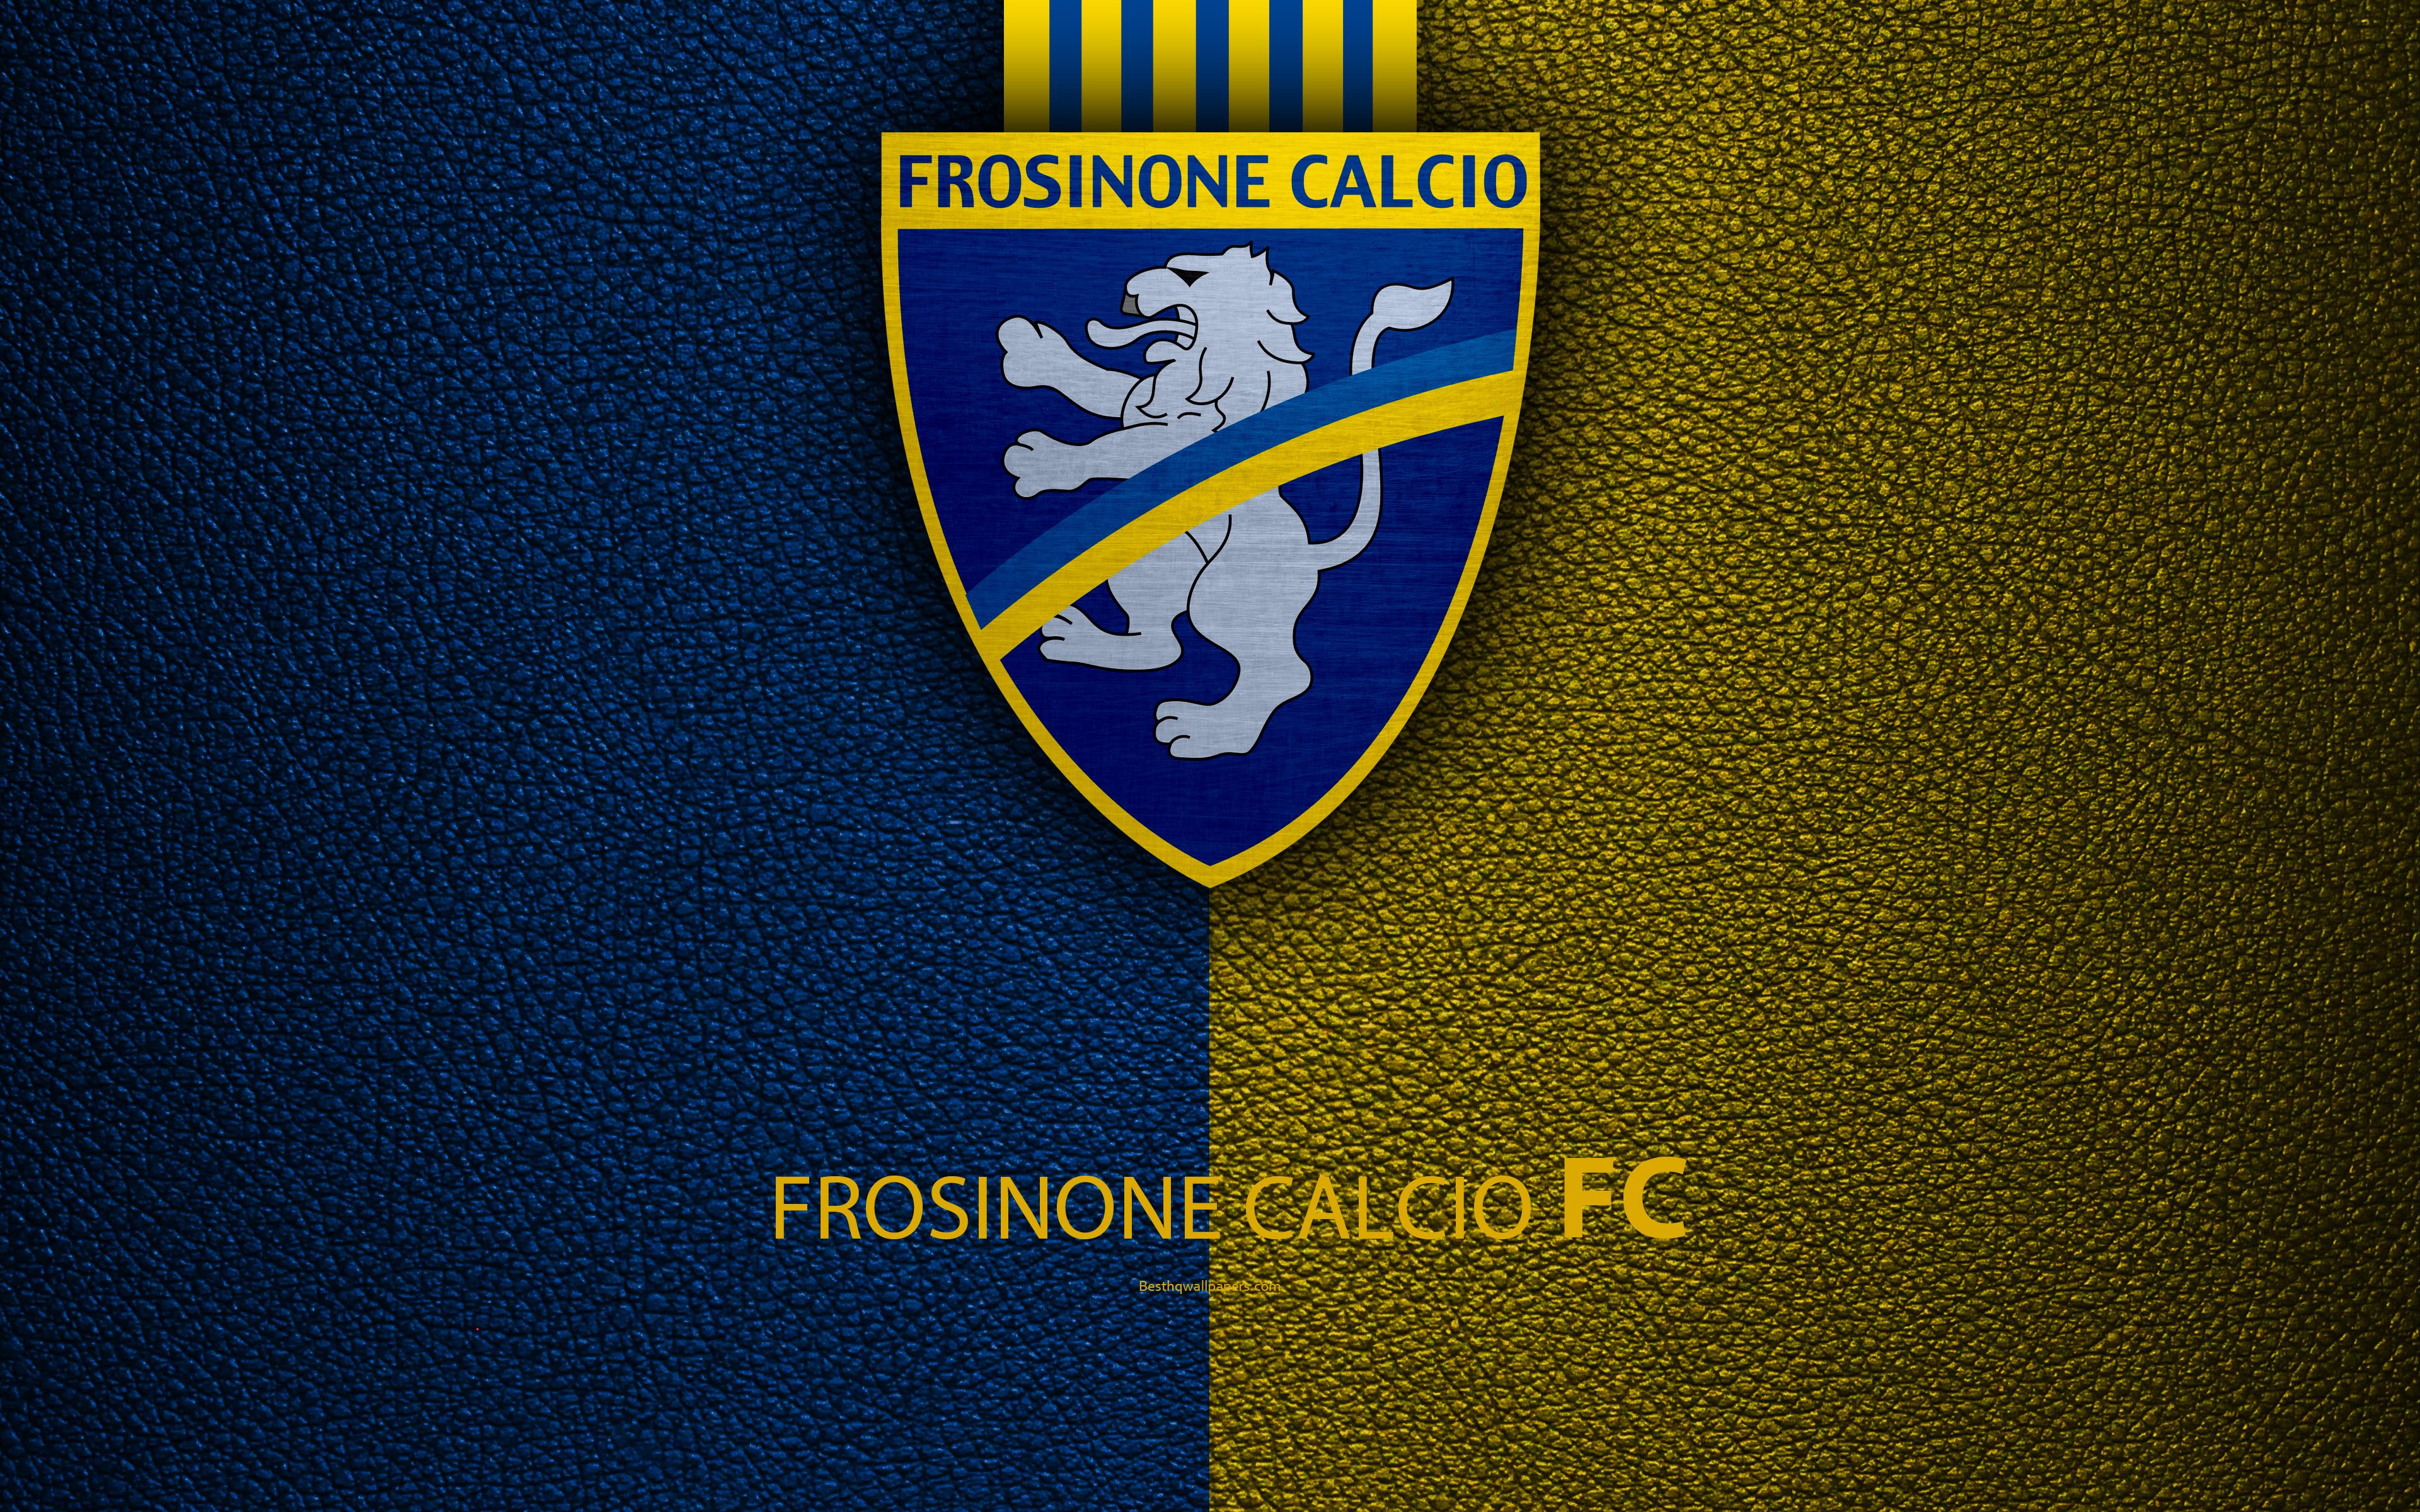 Download wallpaper Frosinone Calcio, 4k, Italian football club